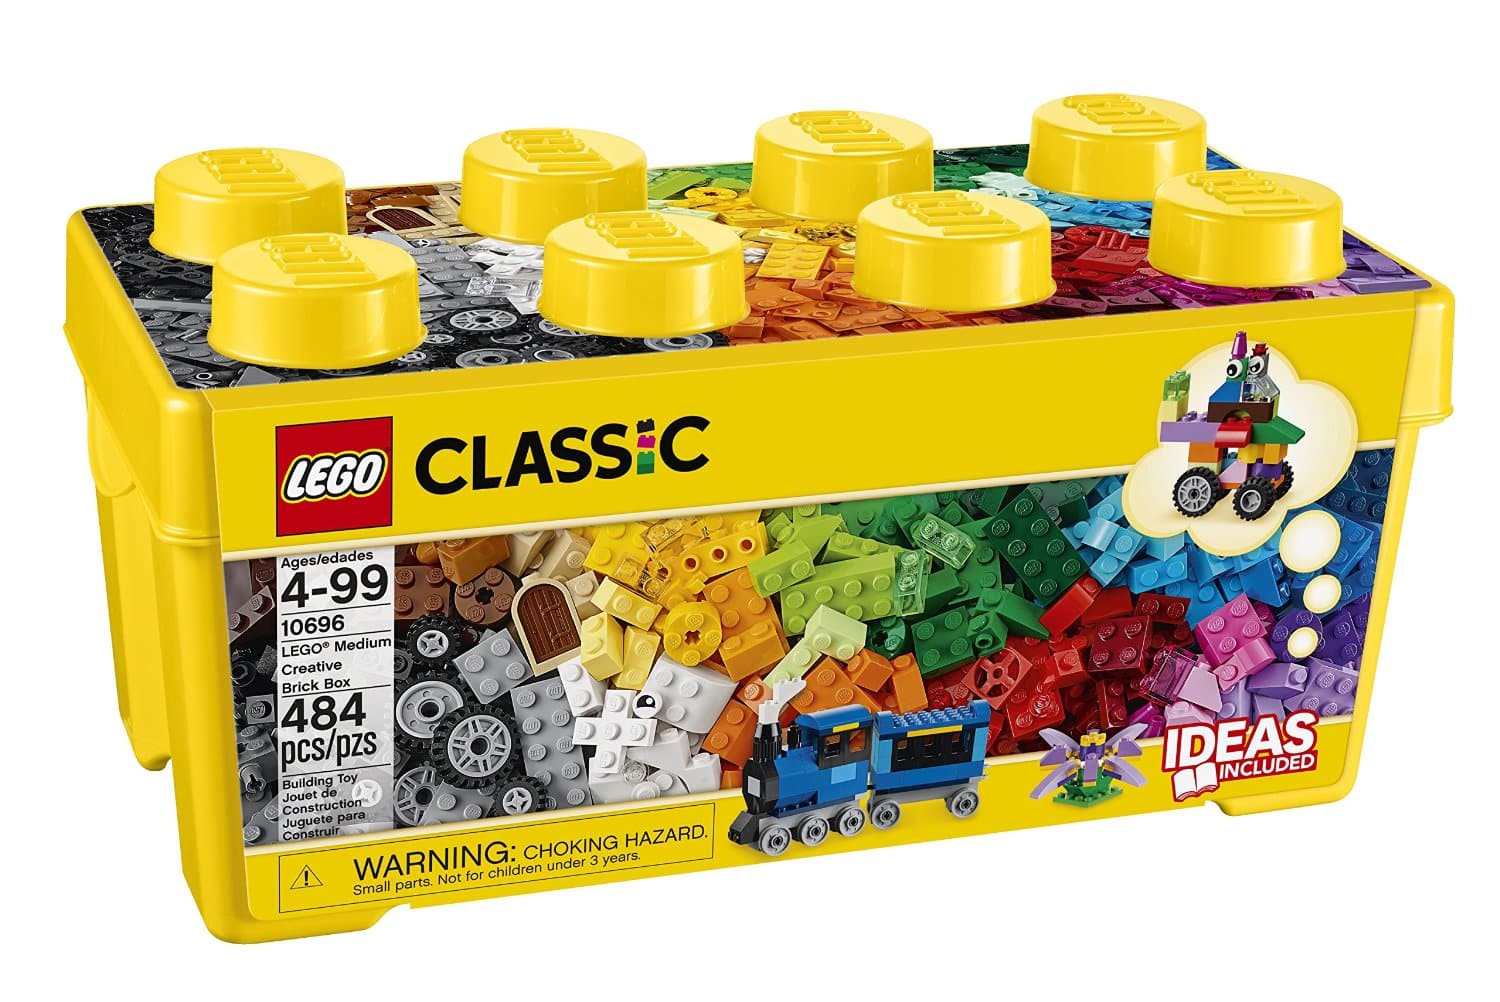 DEAL ALERT: LEGO Classic Medium Creative Brick Box